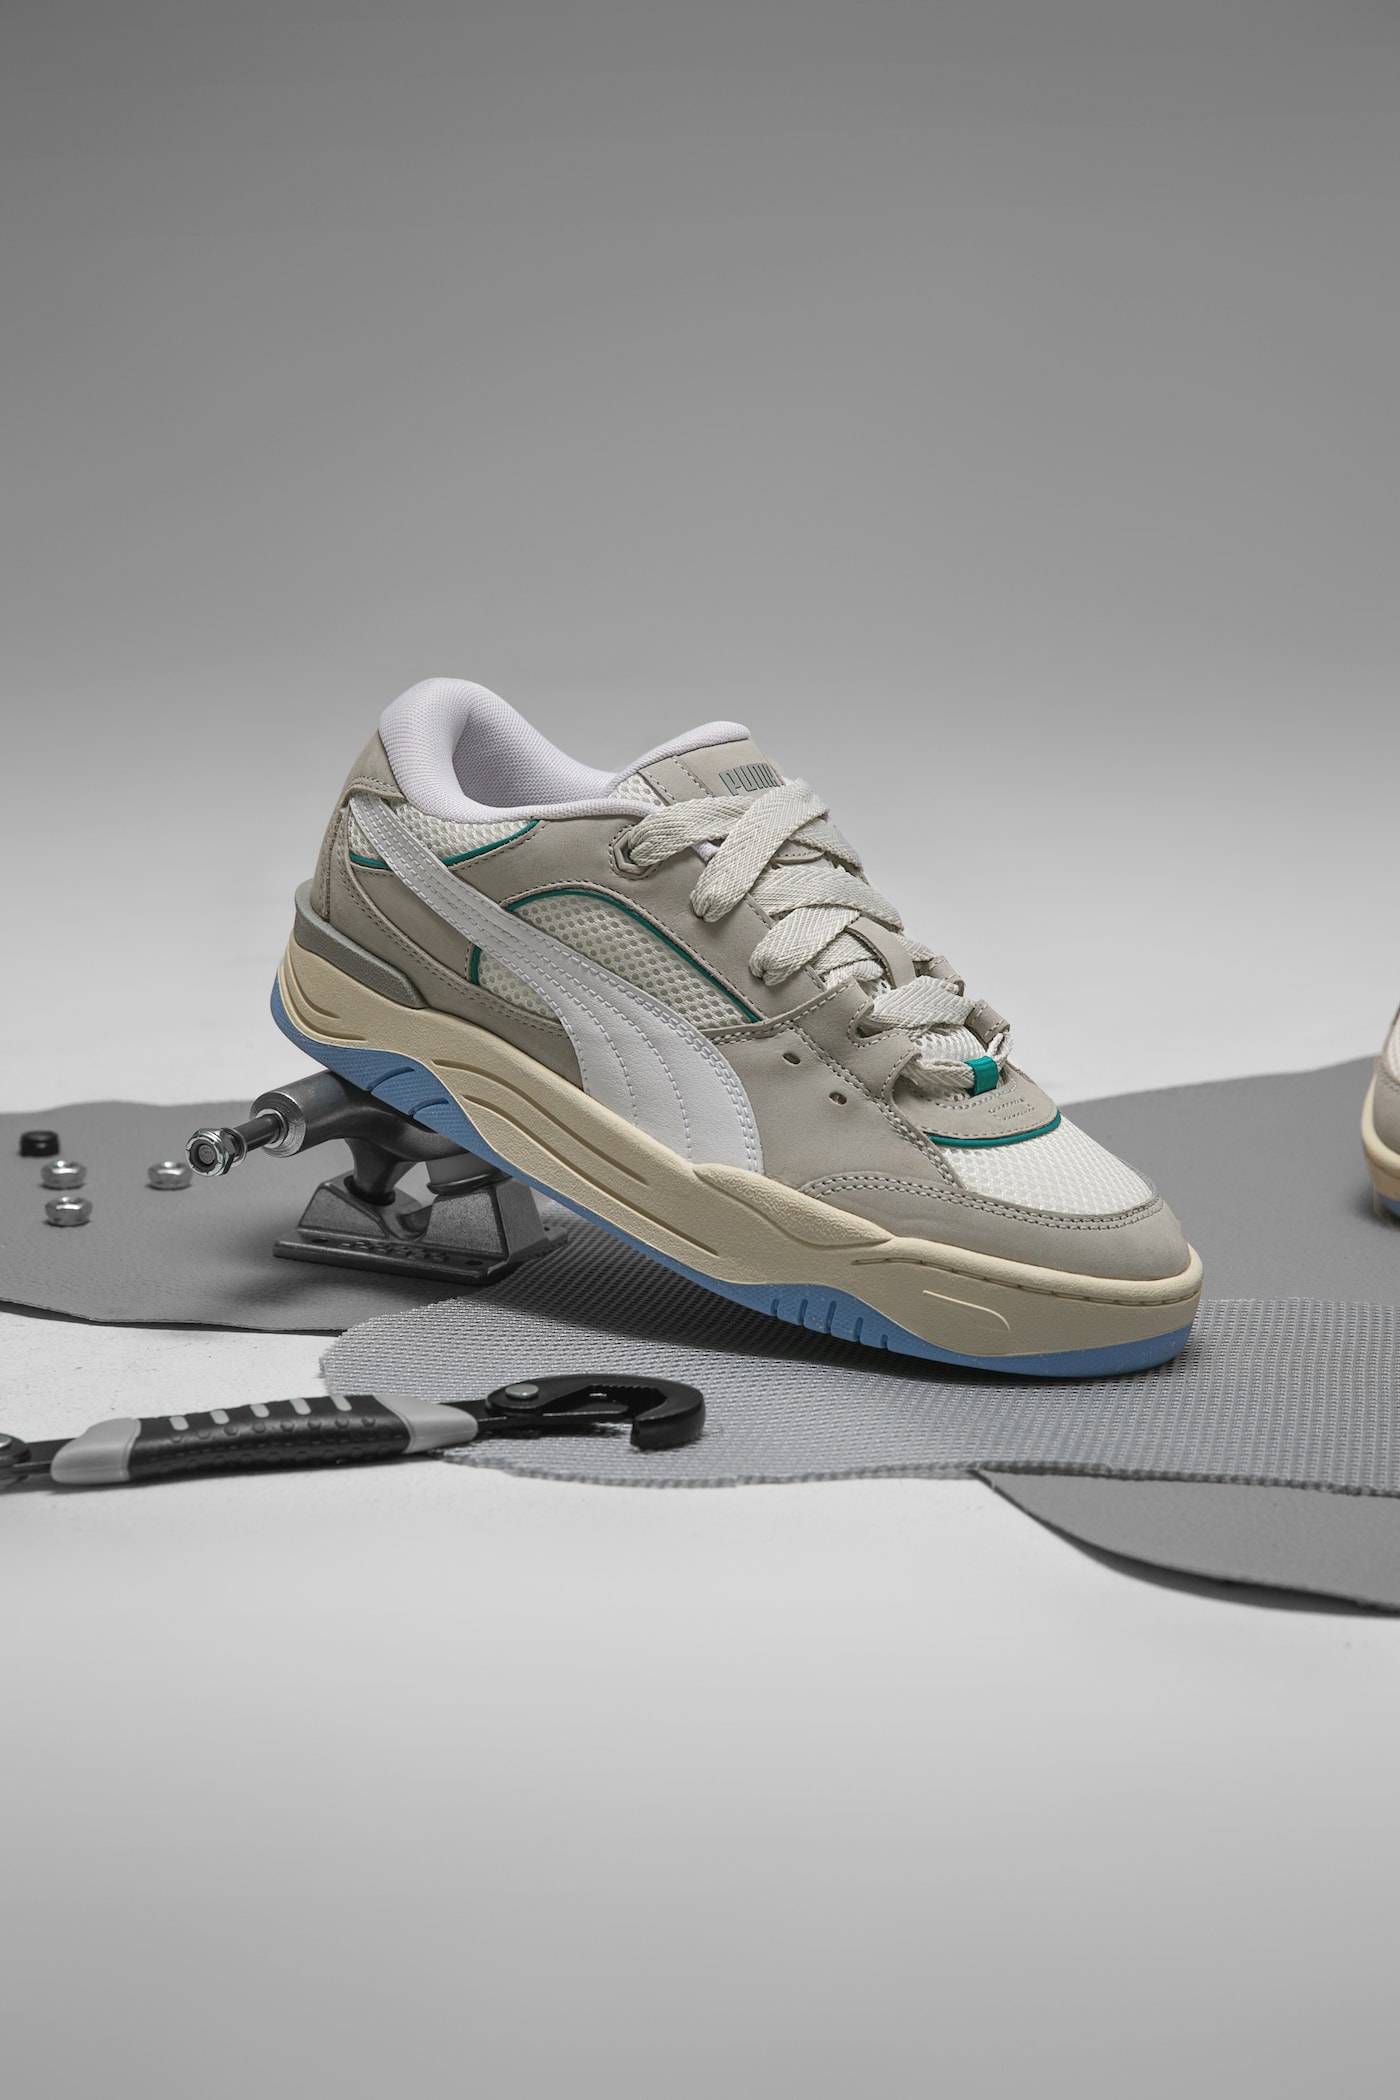 PUMA 推出全新 PUMA-180 运动鞋系列